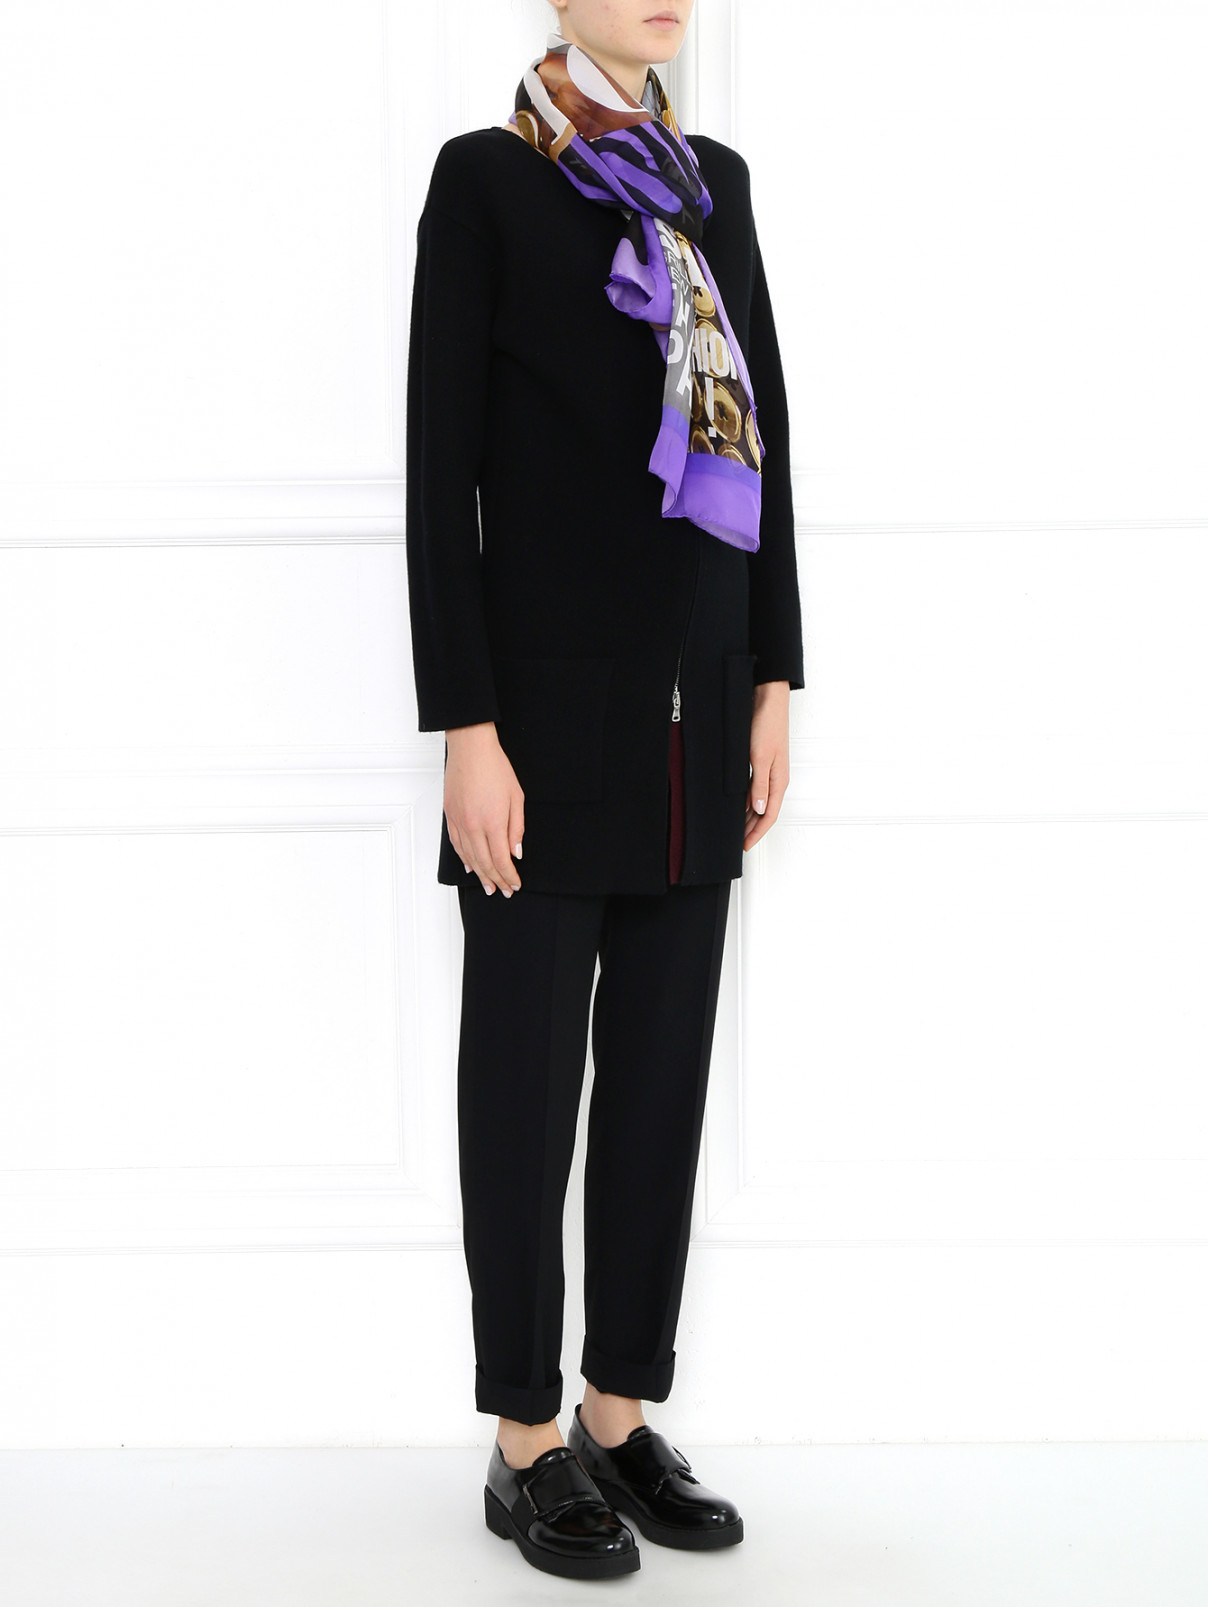 Шарф из шелка с узором Moschino Couture  –  Модель Общий вид  – Цвет:  Узор